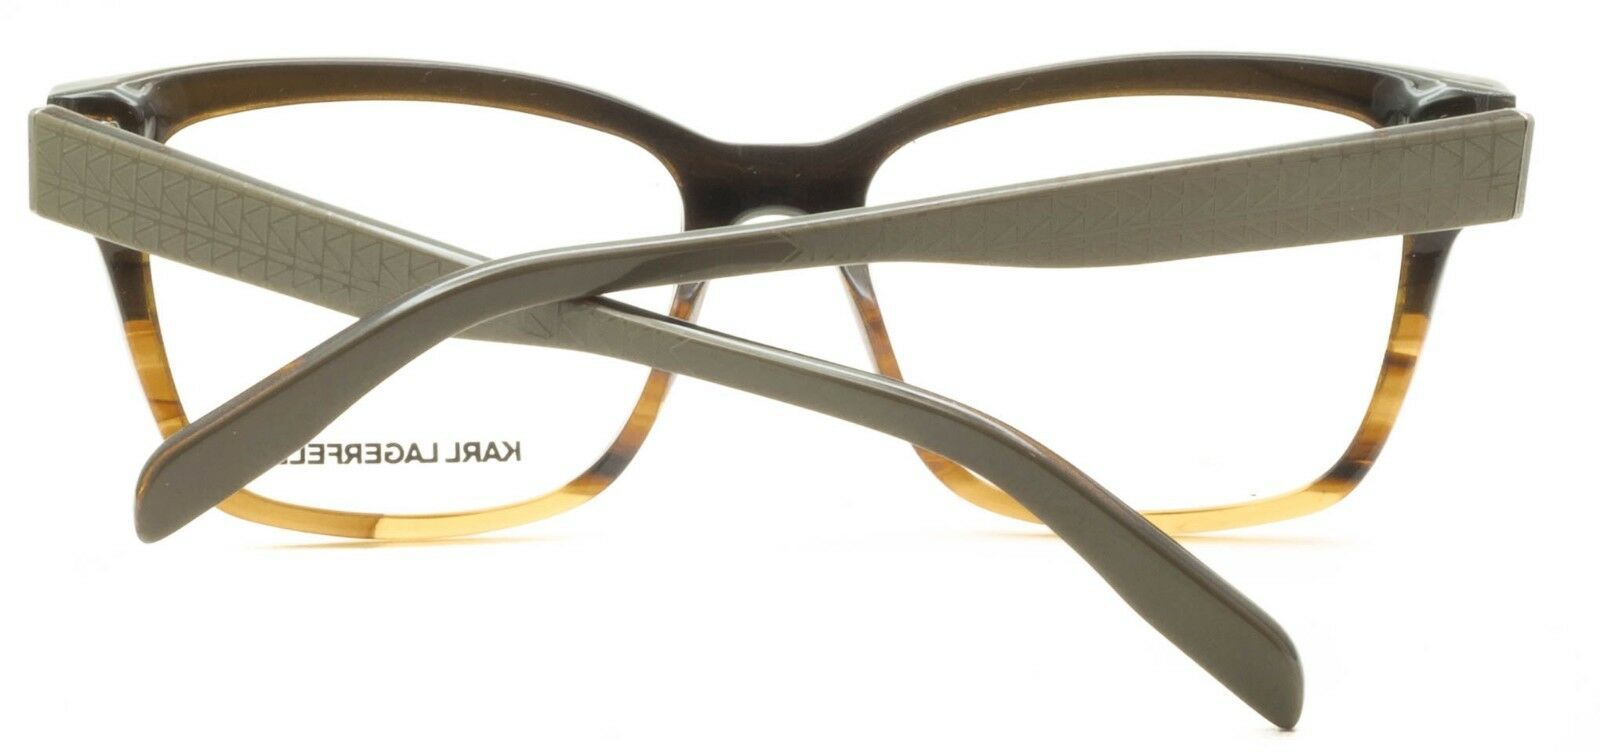 KARL LAGERFELD KL 919 113 52mm Eyewear FRAMES RX Optical Eyeglasses Glasses New